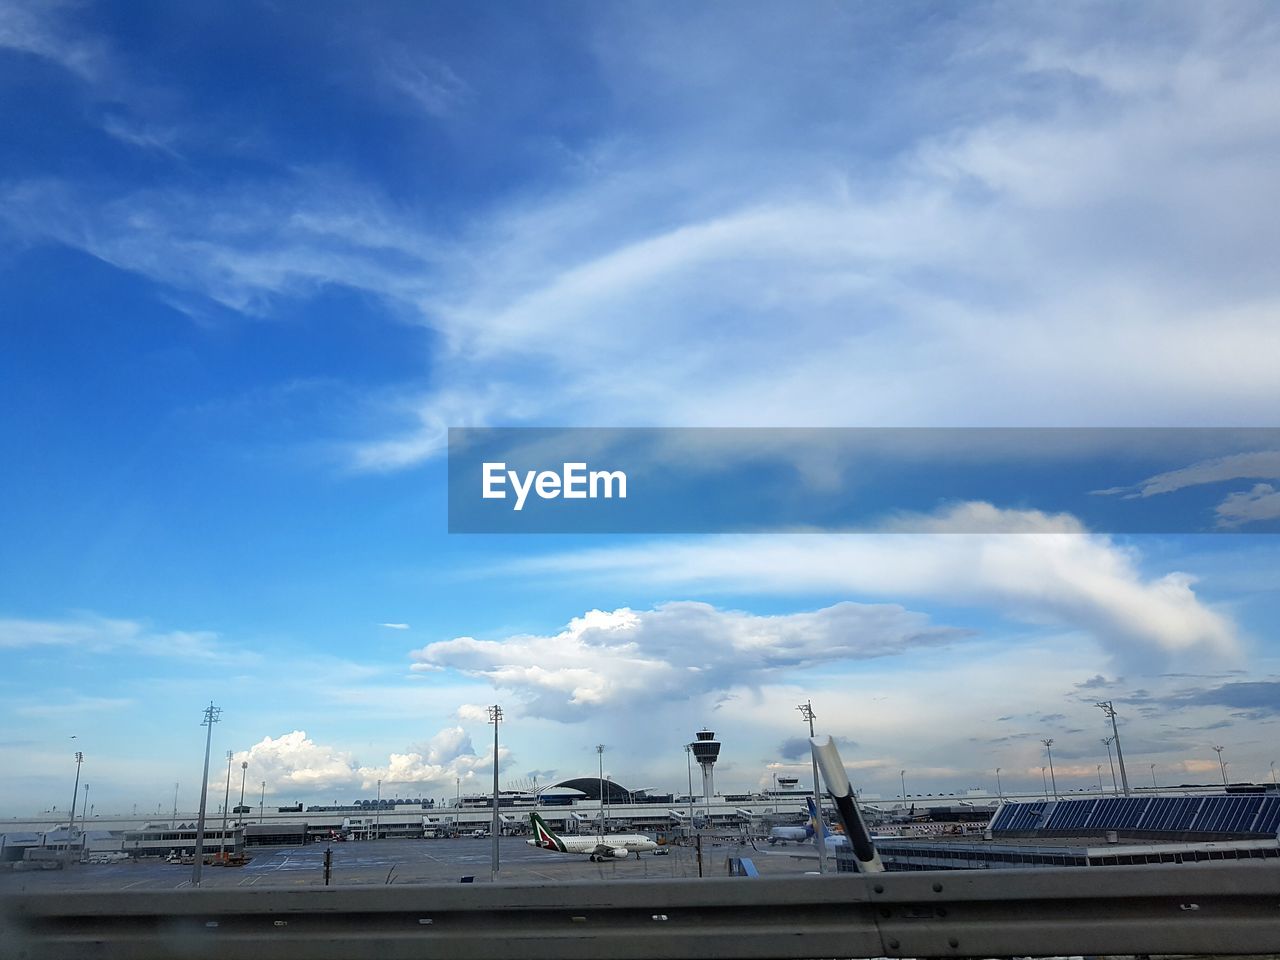 Airport runway against sky